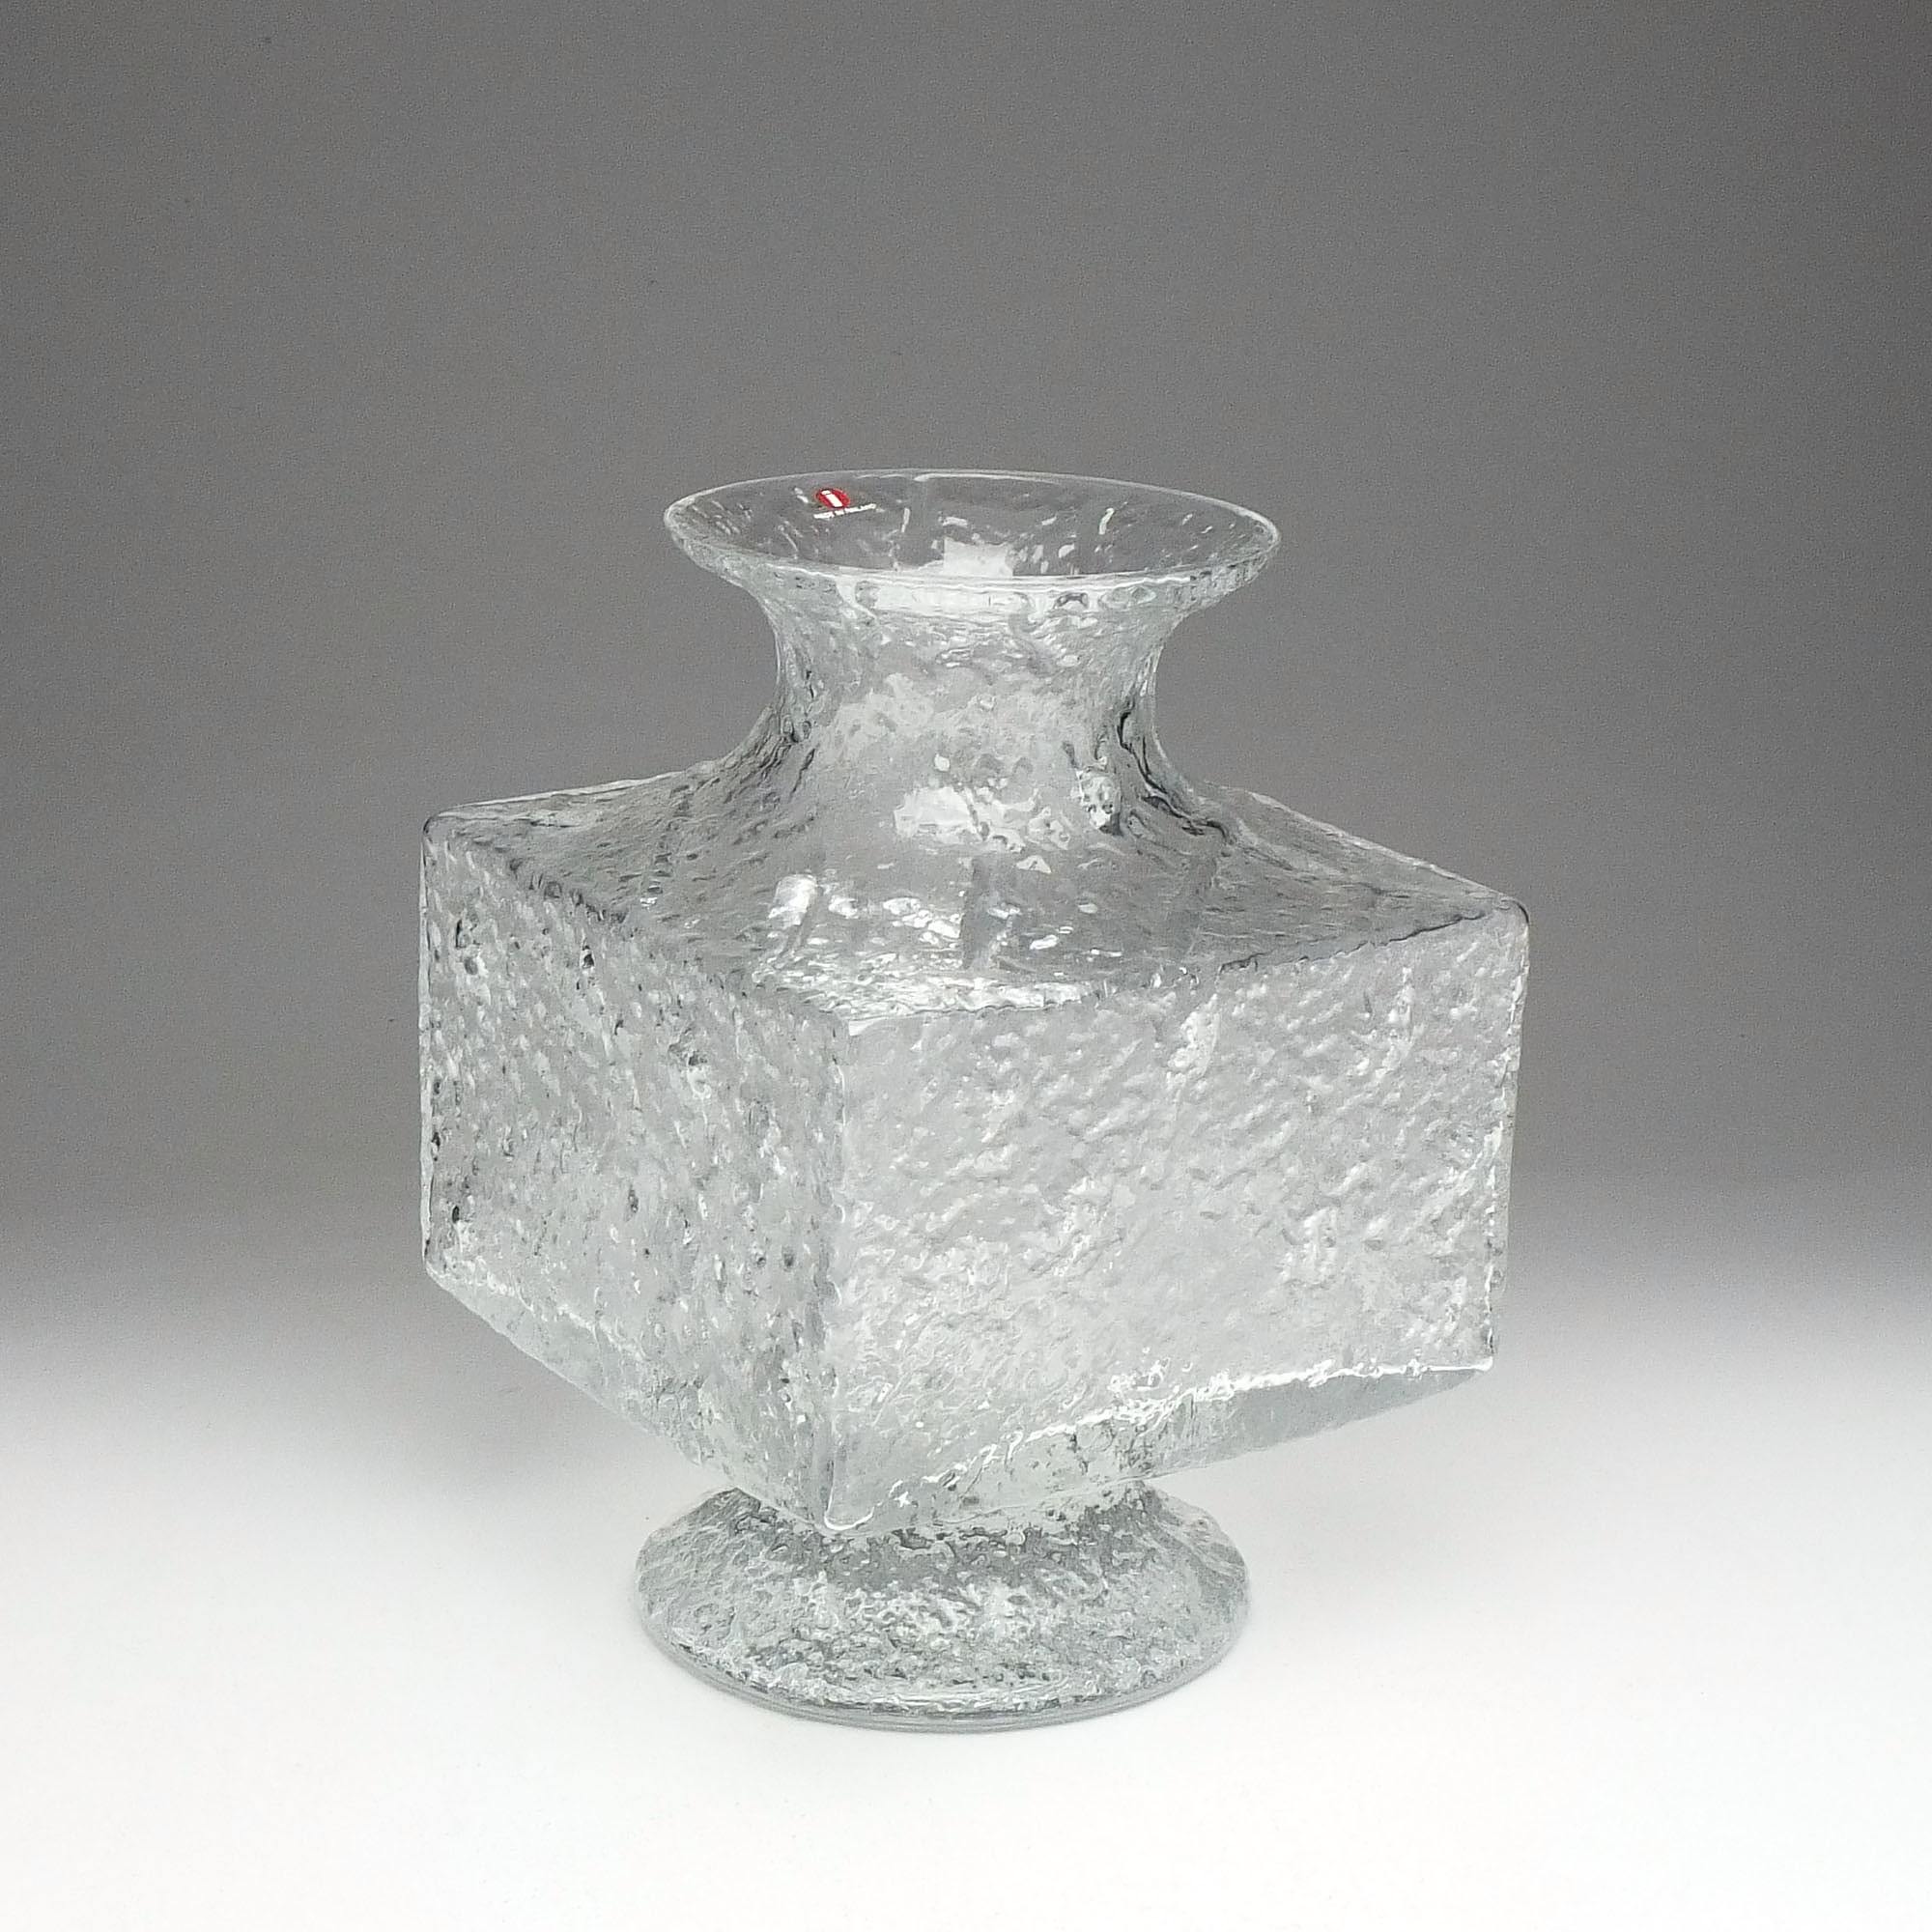 'Iittala Finland Crassus Large Glass Vase Designed by Timo Sarpaneva'